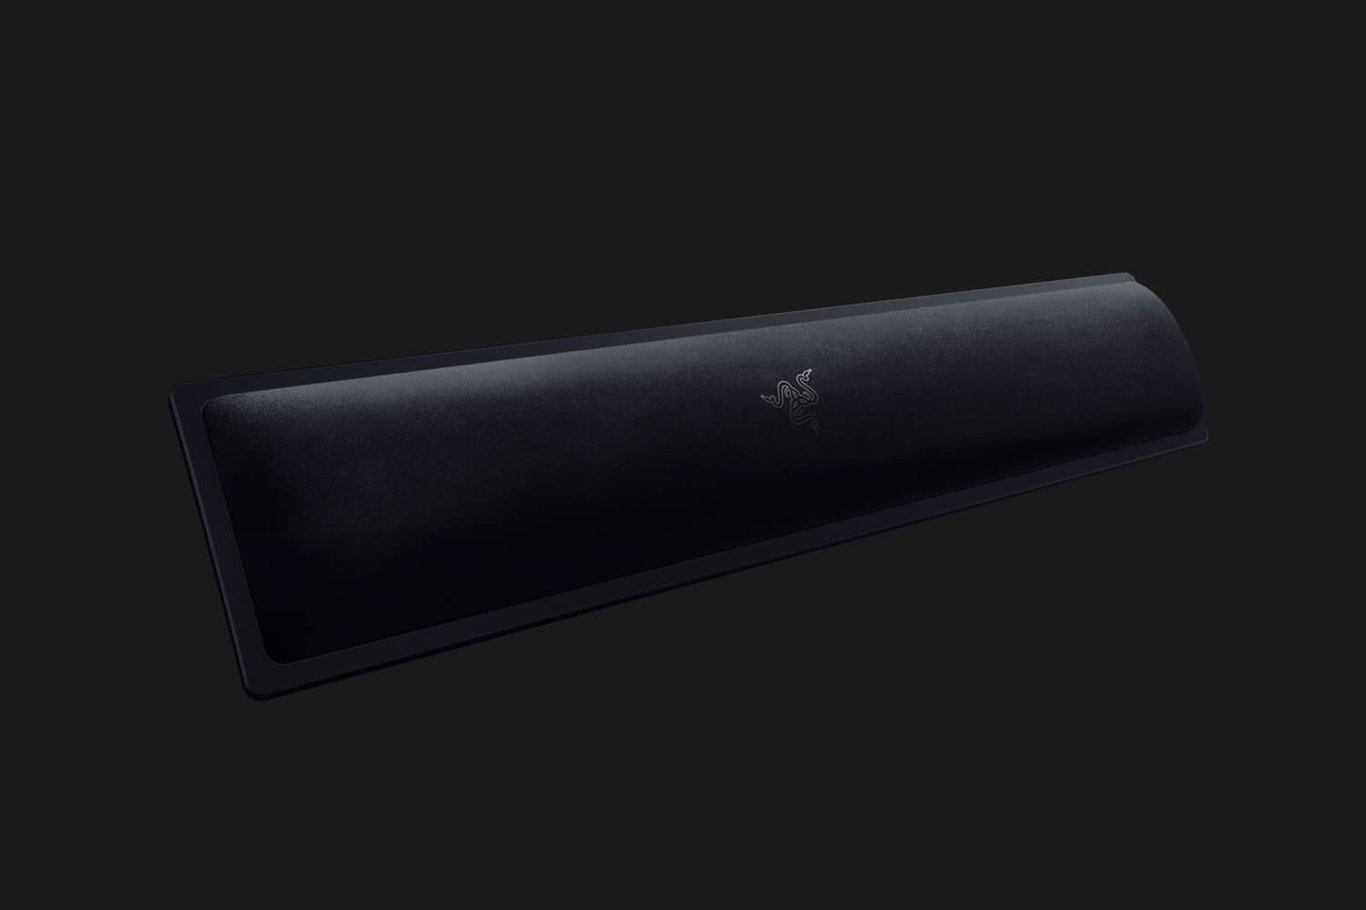 Razer Ergonomic Wrist Rest Pro For Full-sized Keyboards 鍵盤護腕墊(冷凍凝膠手枕)